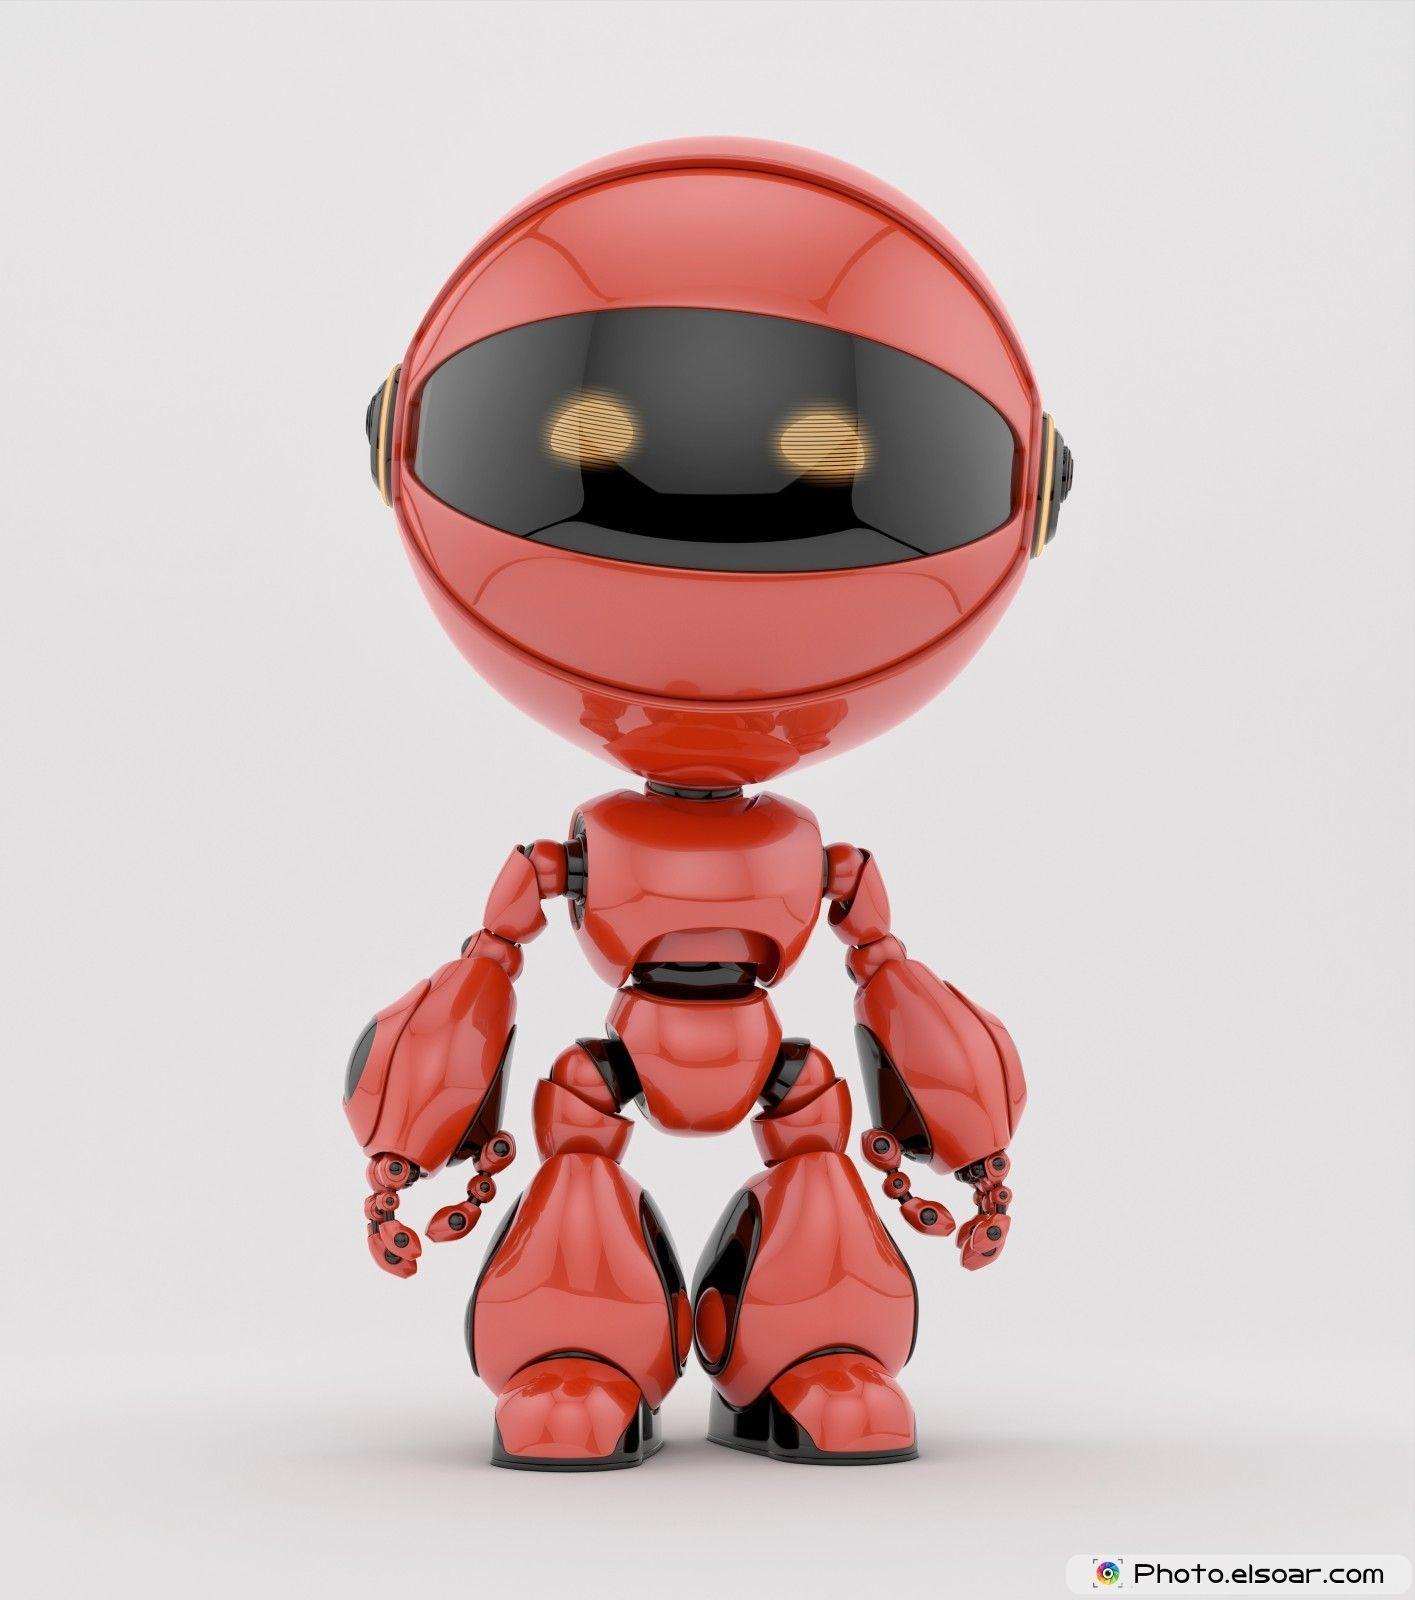 Orange-Eyed Robot Logo - Cute robotic creature with orange eyes. Cute robots